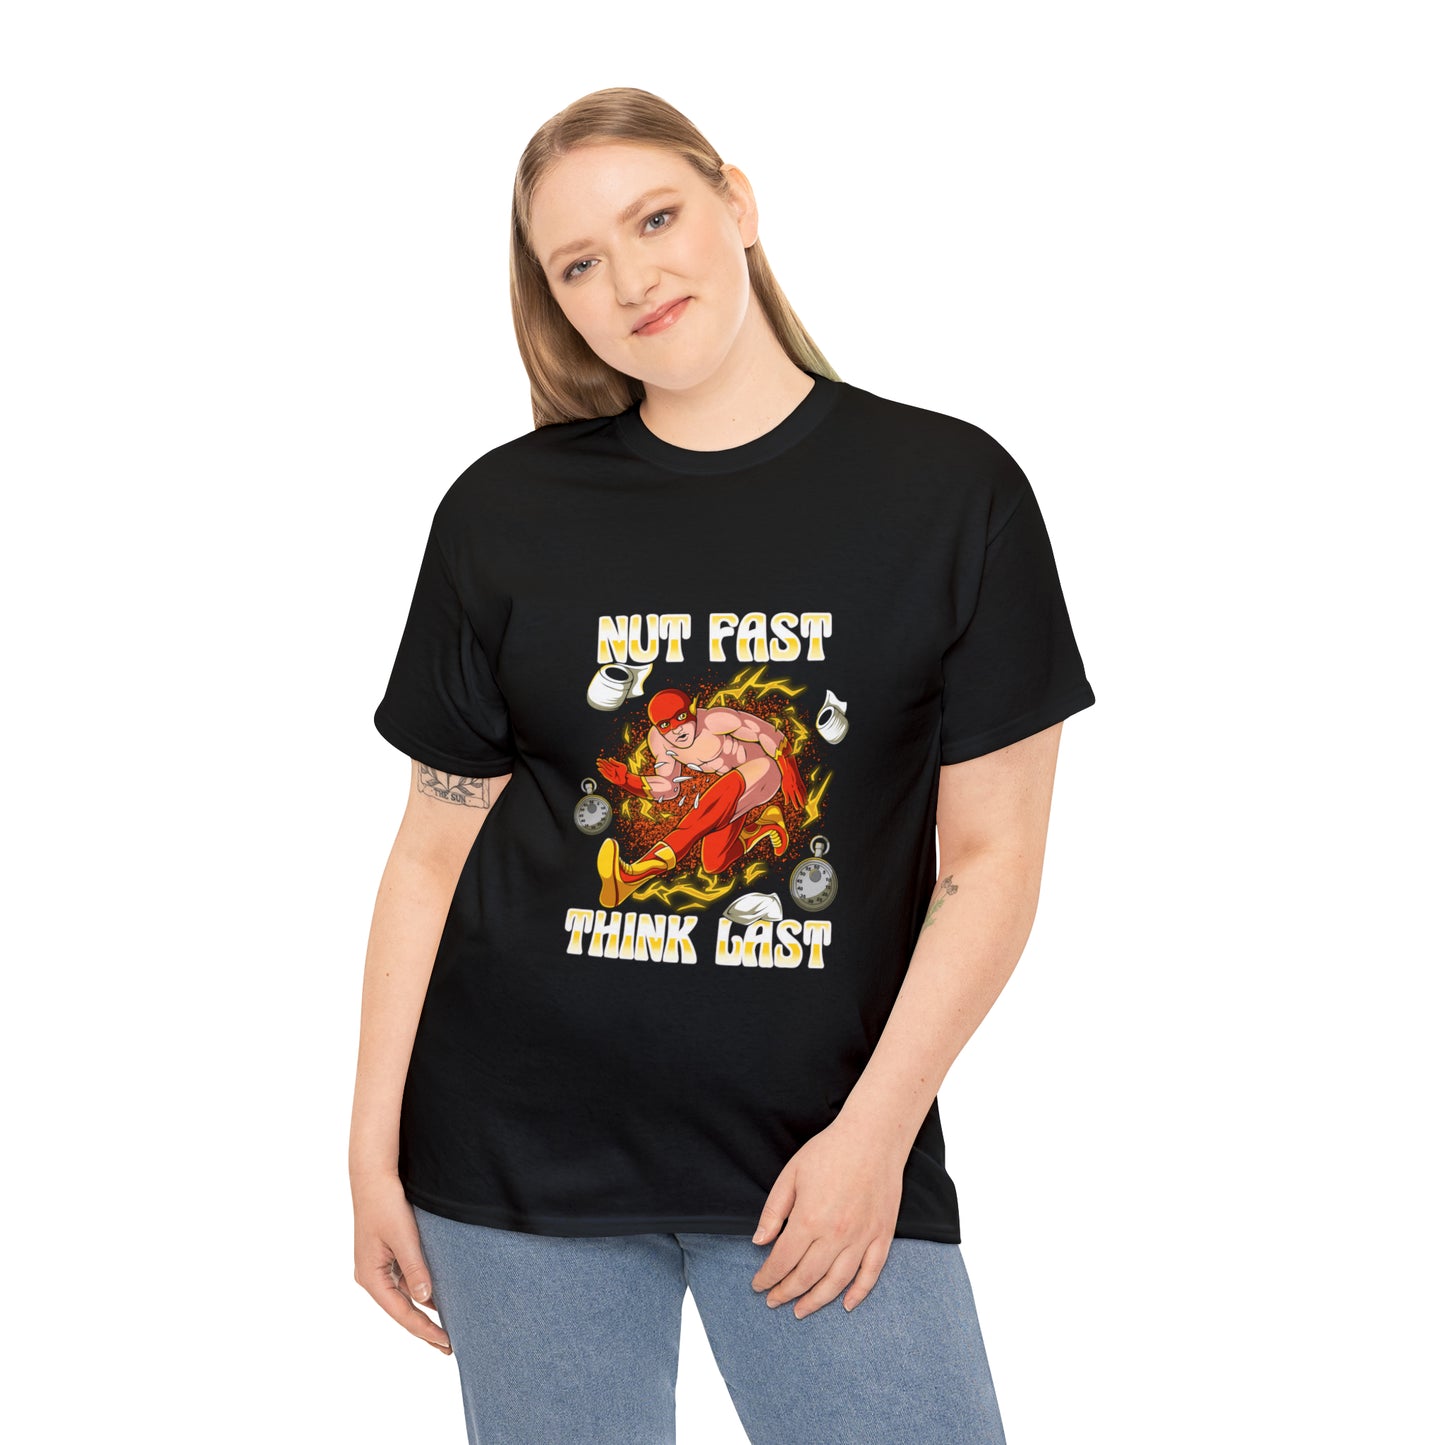 Flash T-Shirt